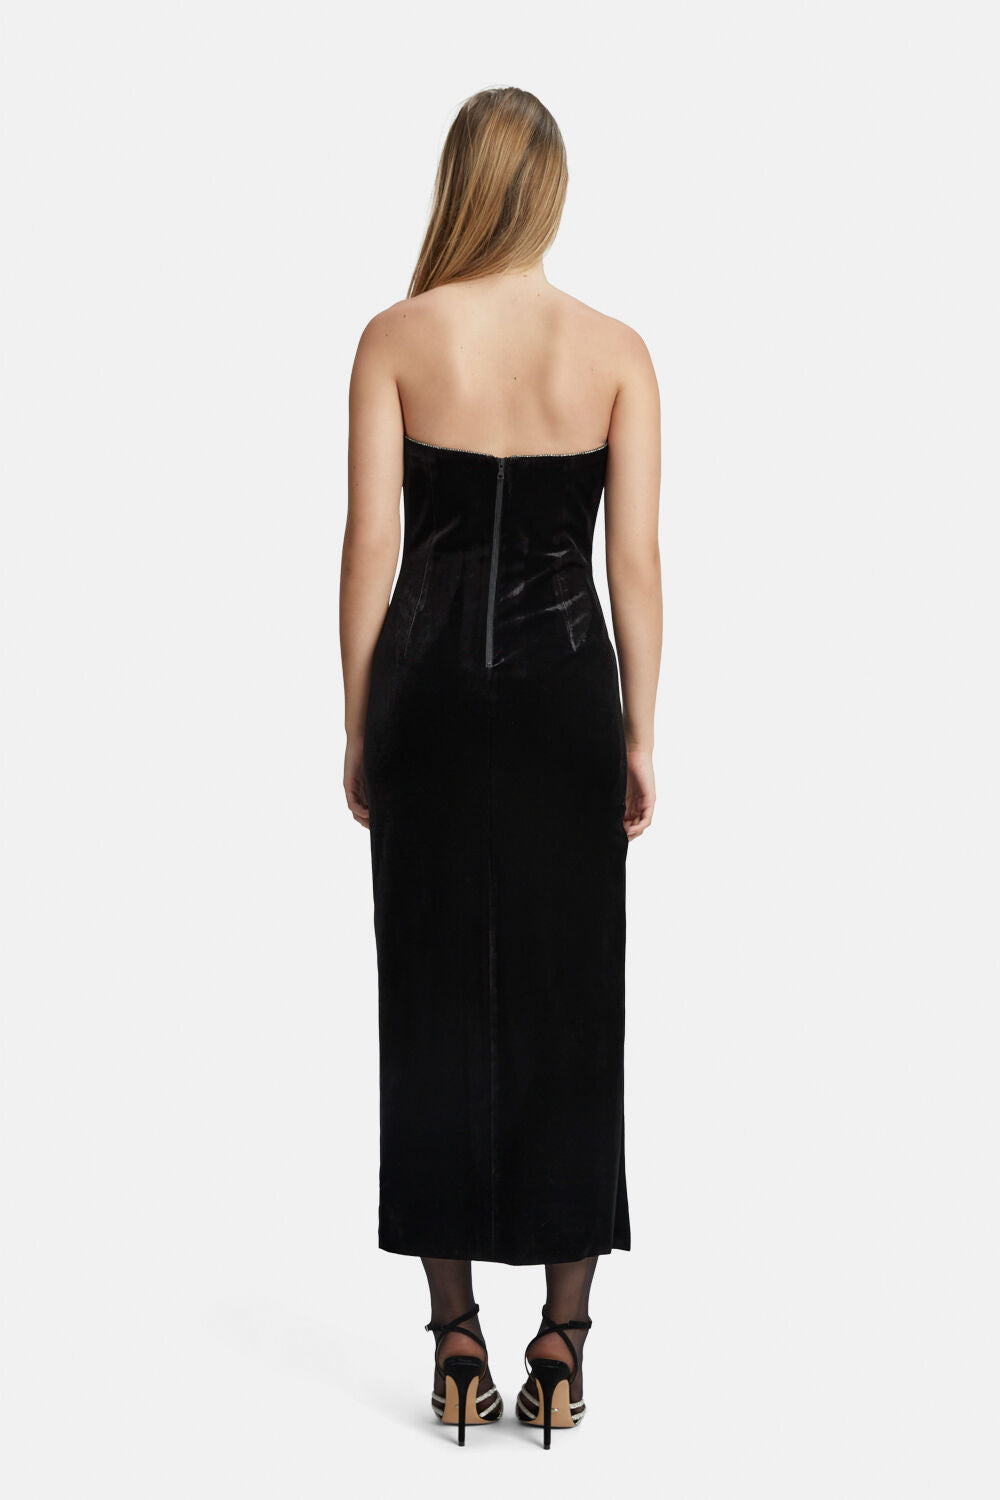 Lilah Velour Midi Dress - Black - SHOPJAUS - JAUS